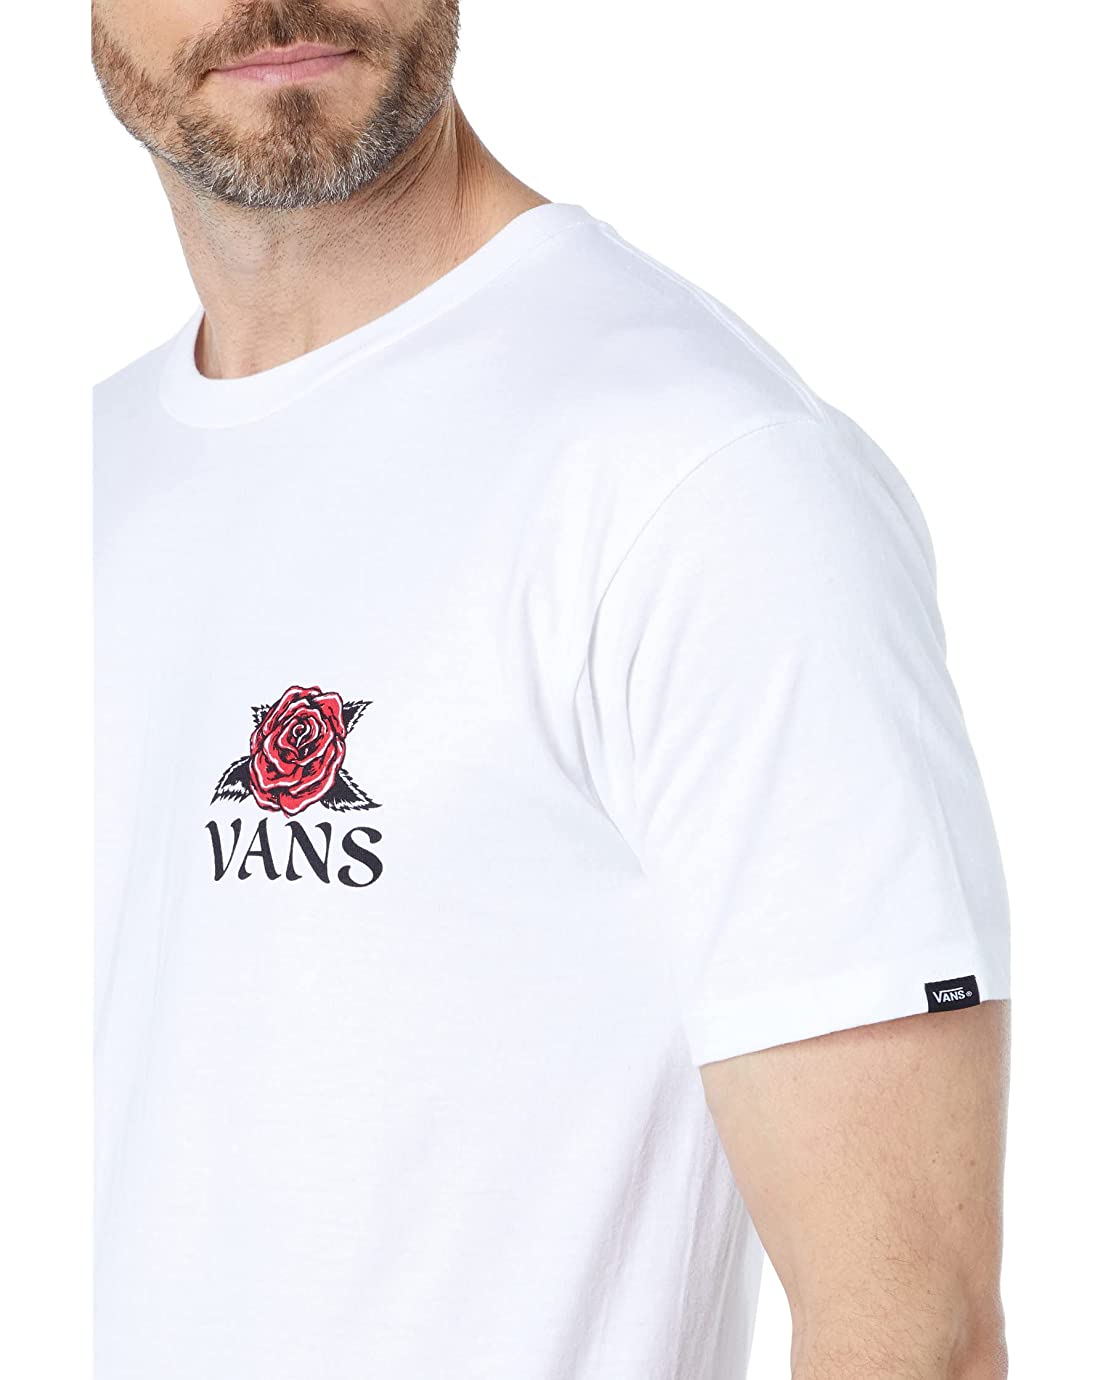 Vans Men's Classic Short Sleeve Tee, (Tattoo Rose) White